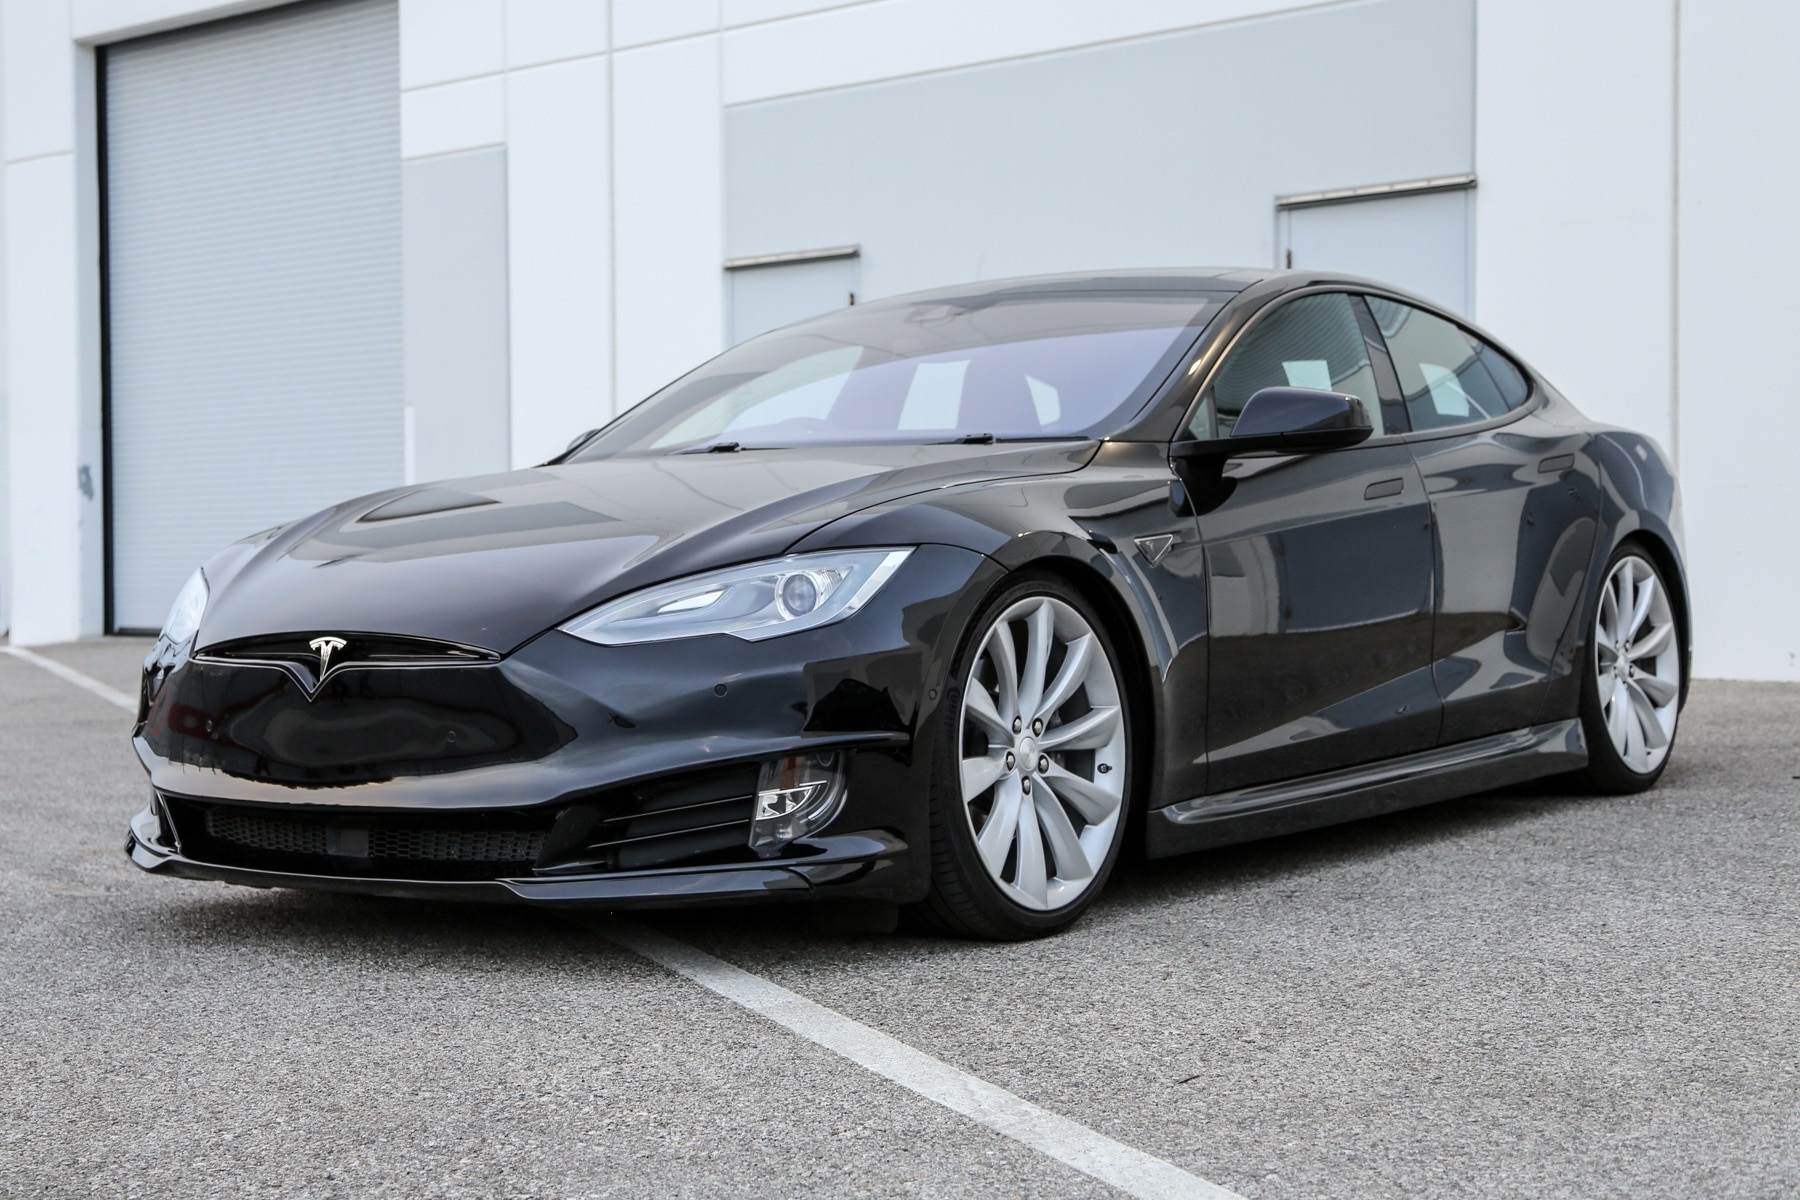 Tesla performance. Tesla model s Performance. Tesla model s перфоманс. Model s Performance Тесла. Tesla model s Performance 2020.